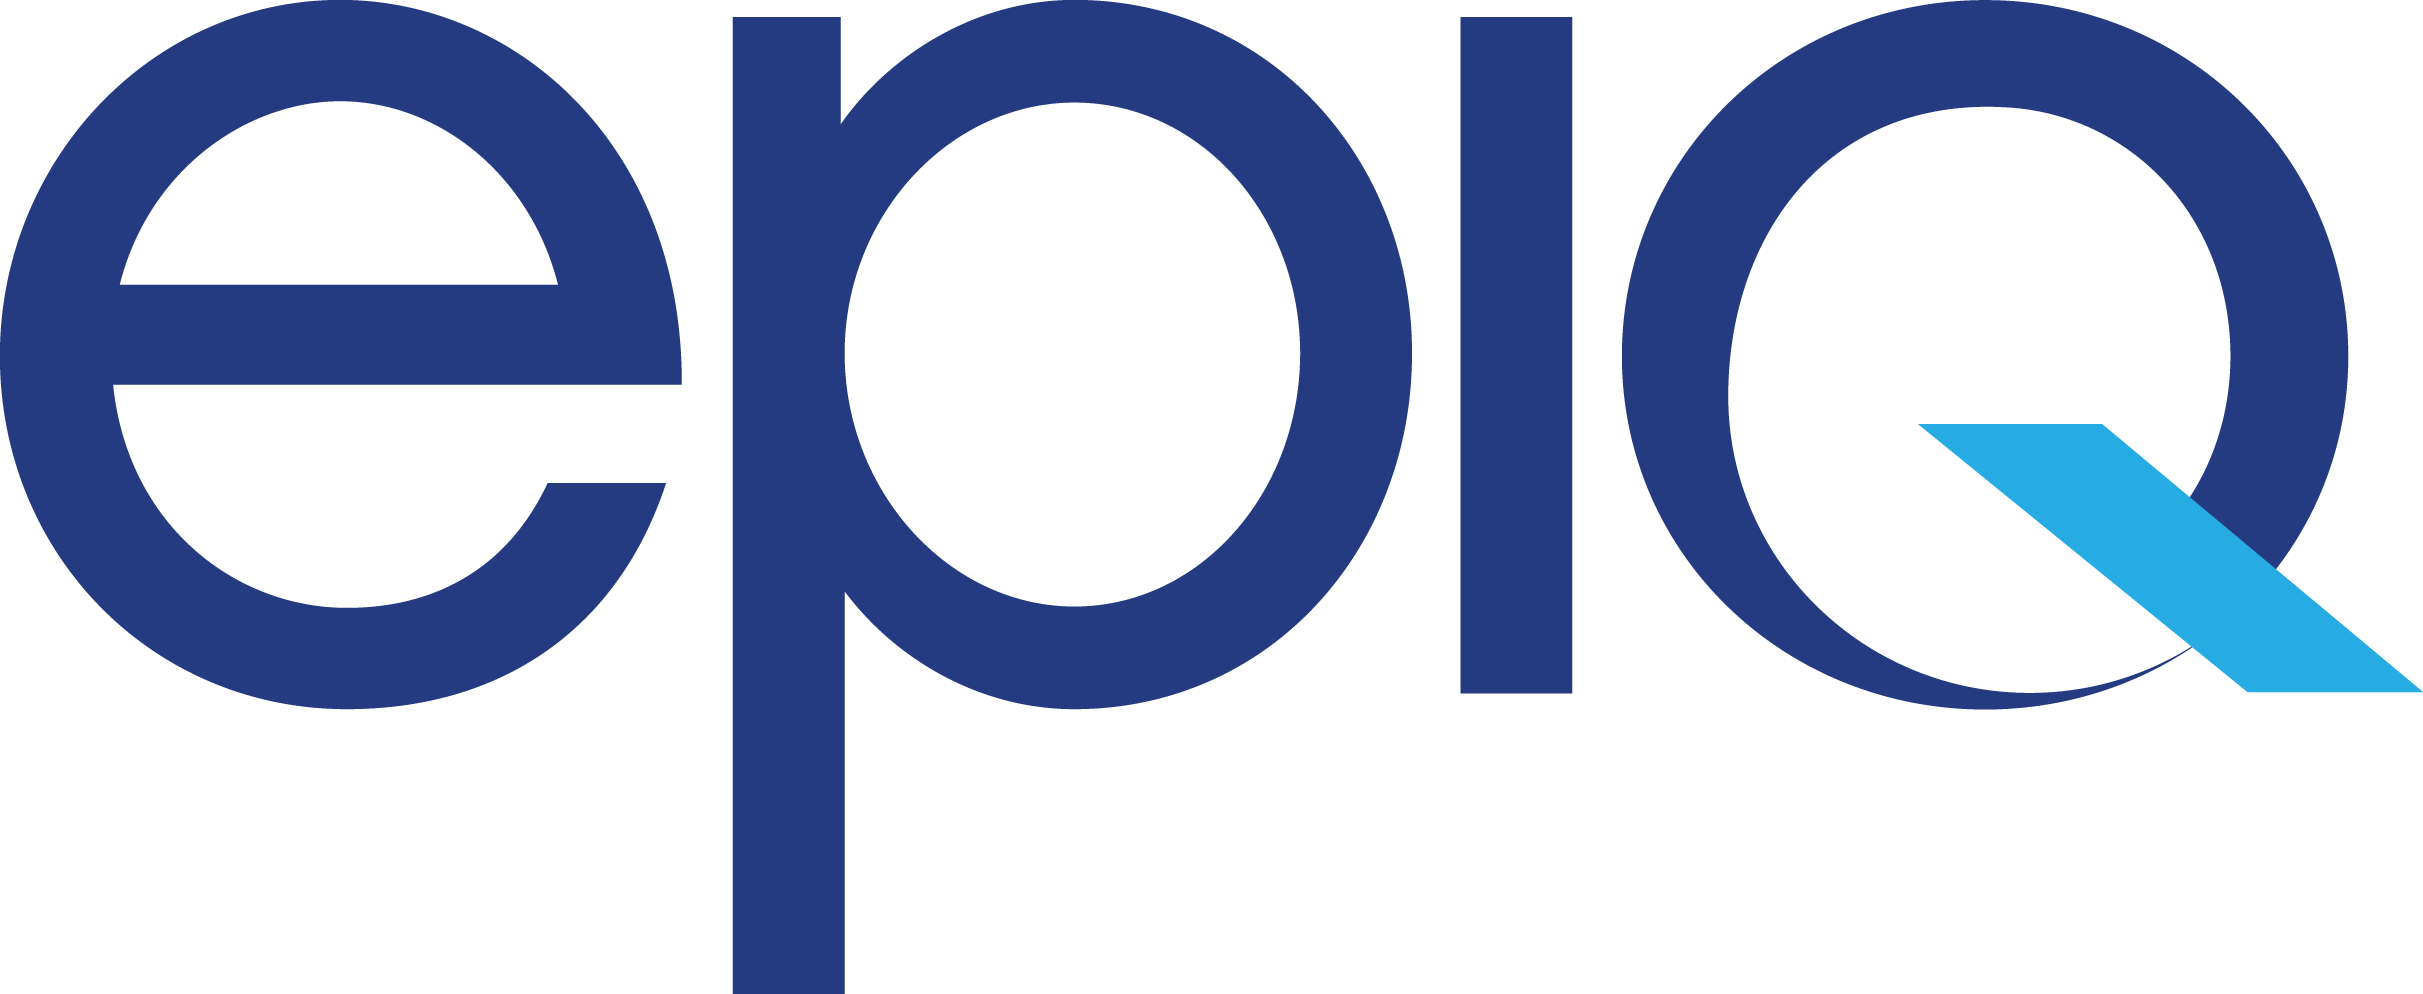 1406 Epiq Global Business Transformation Solutions, LLC logo